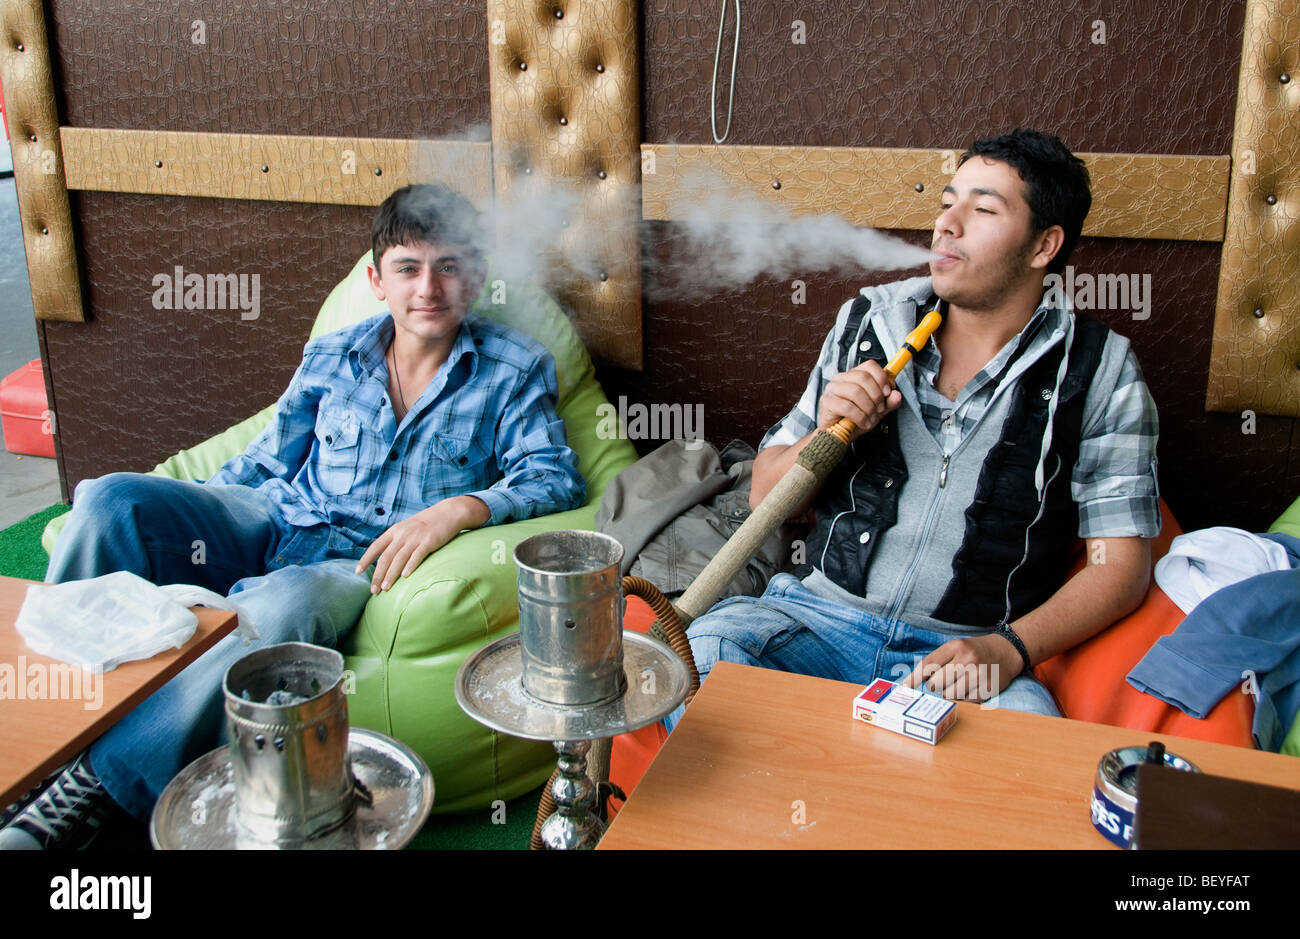 Istanbul Turkey Teenagers Smoking Water pipe boys Stock Photo